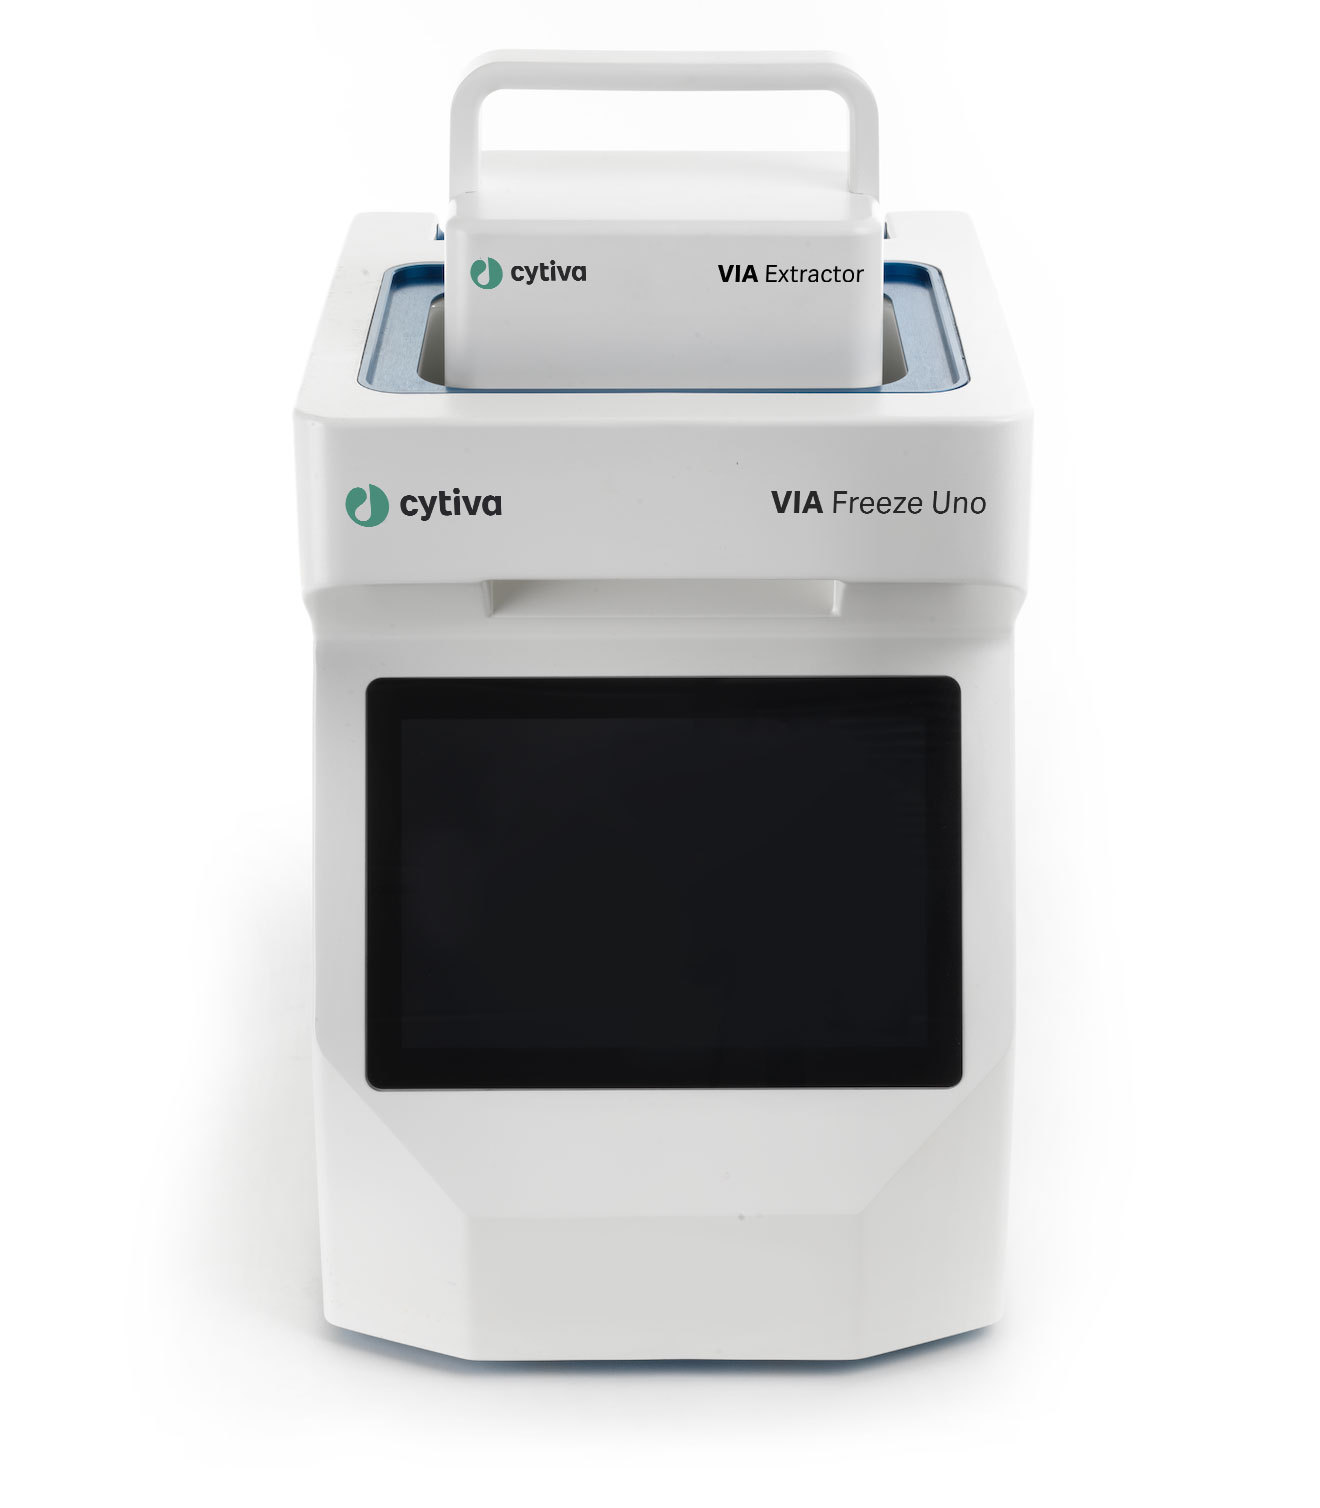 Cytiva 温控型高效能组织处理器 VIA Extractor